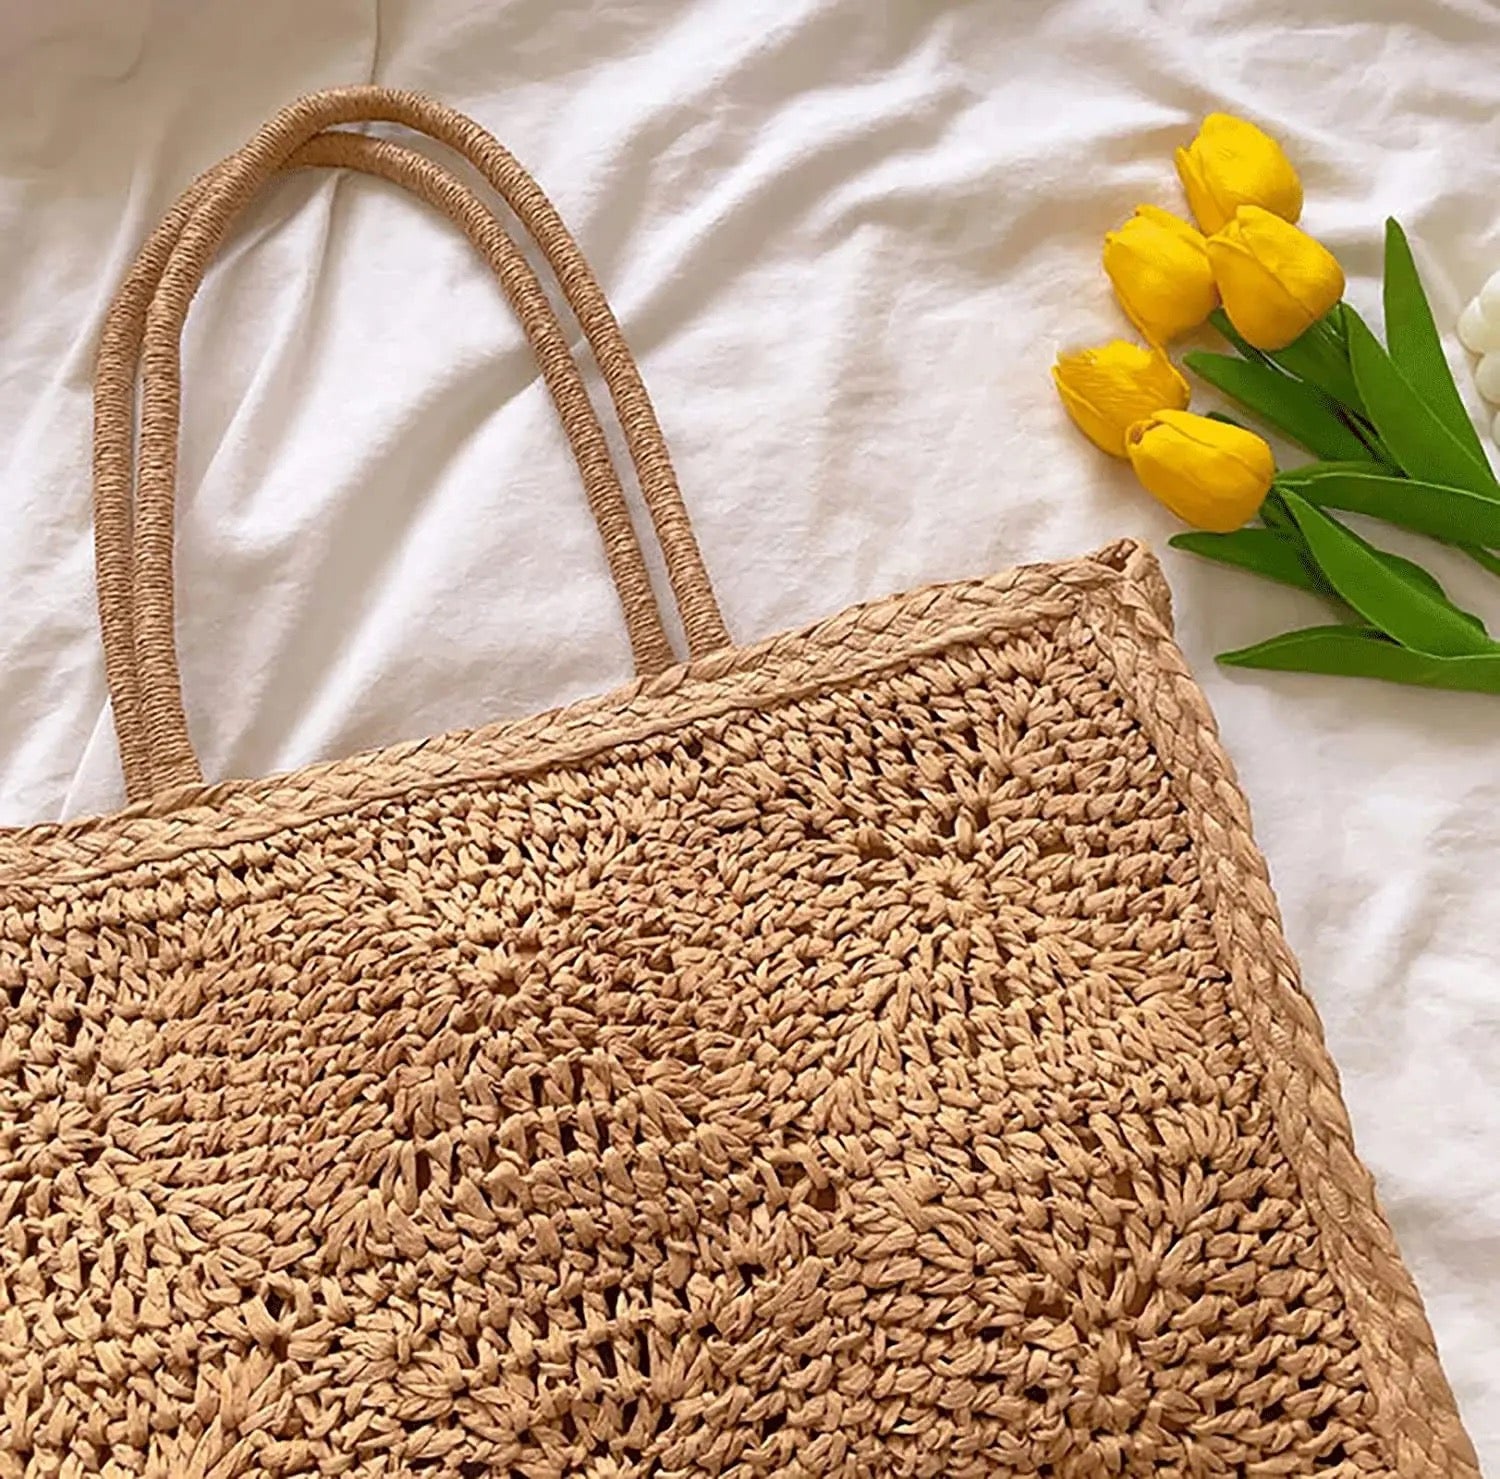 Crochet straw bag